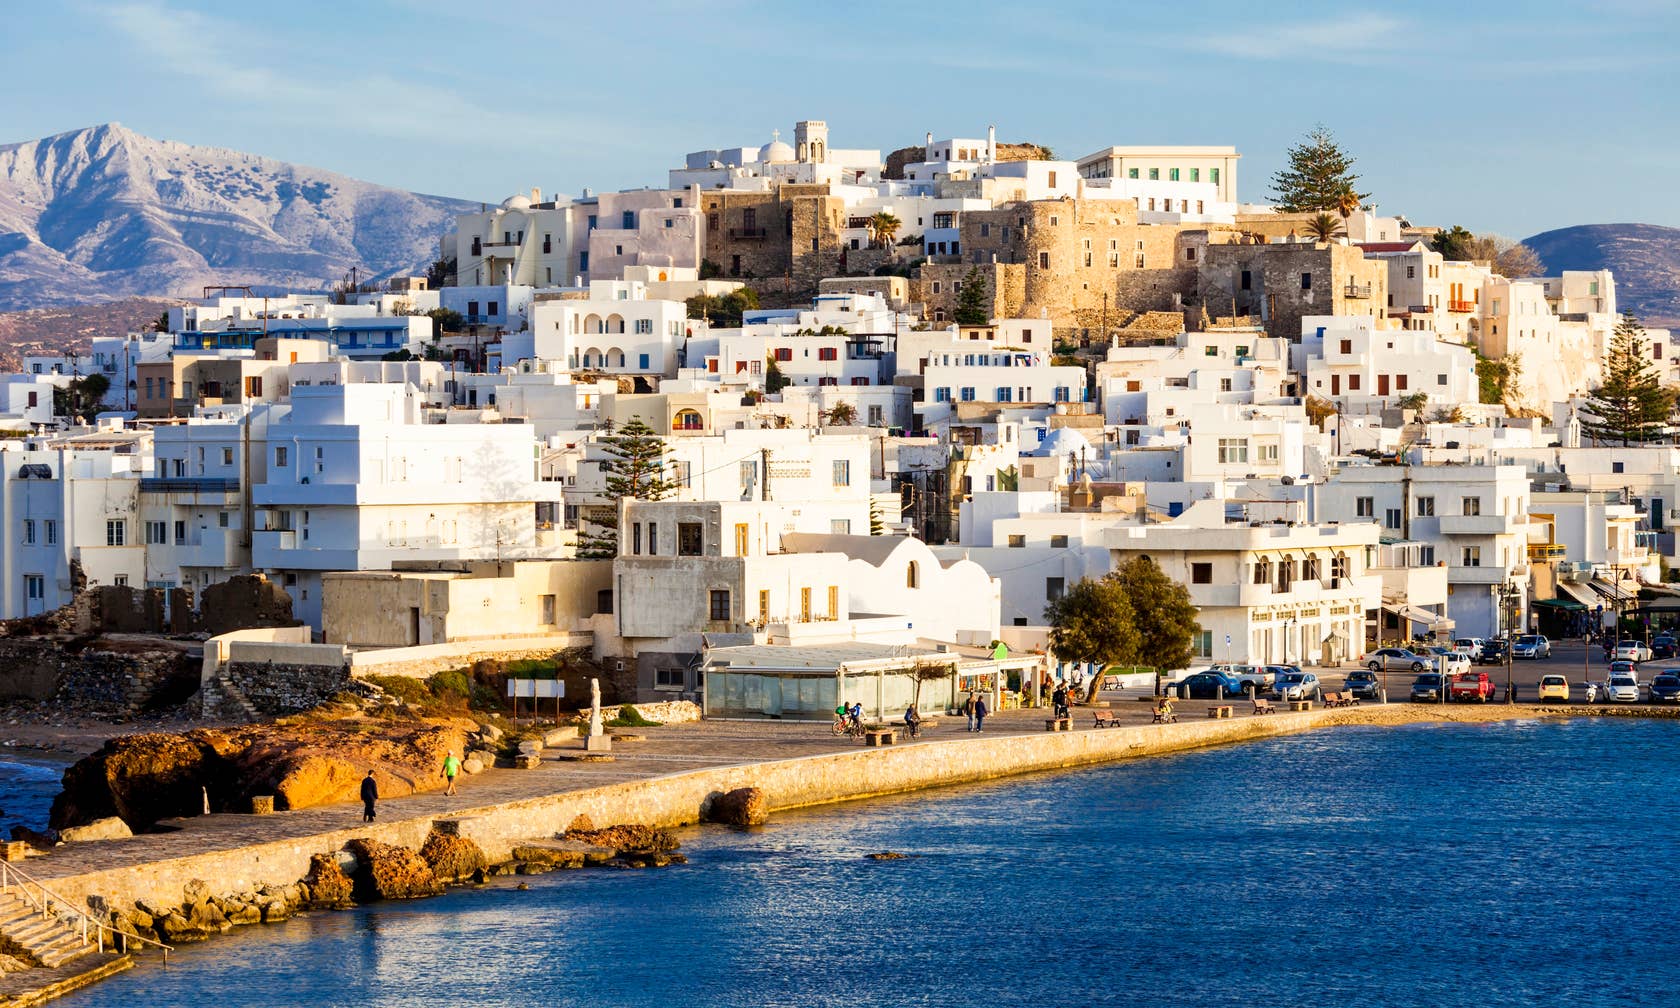 Holiday rental apartments in Naxos